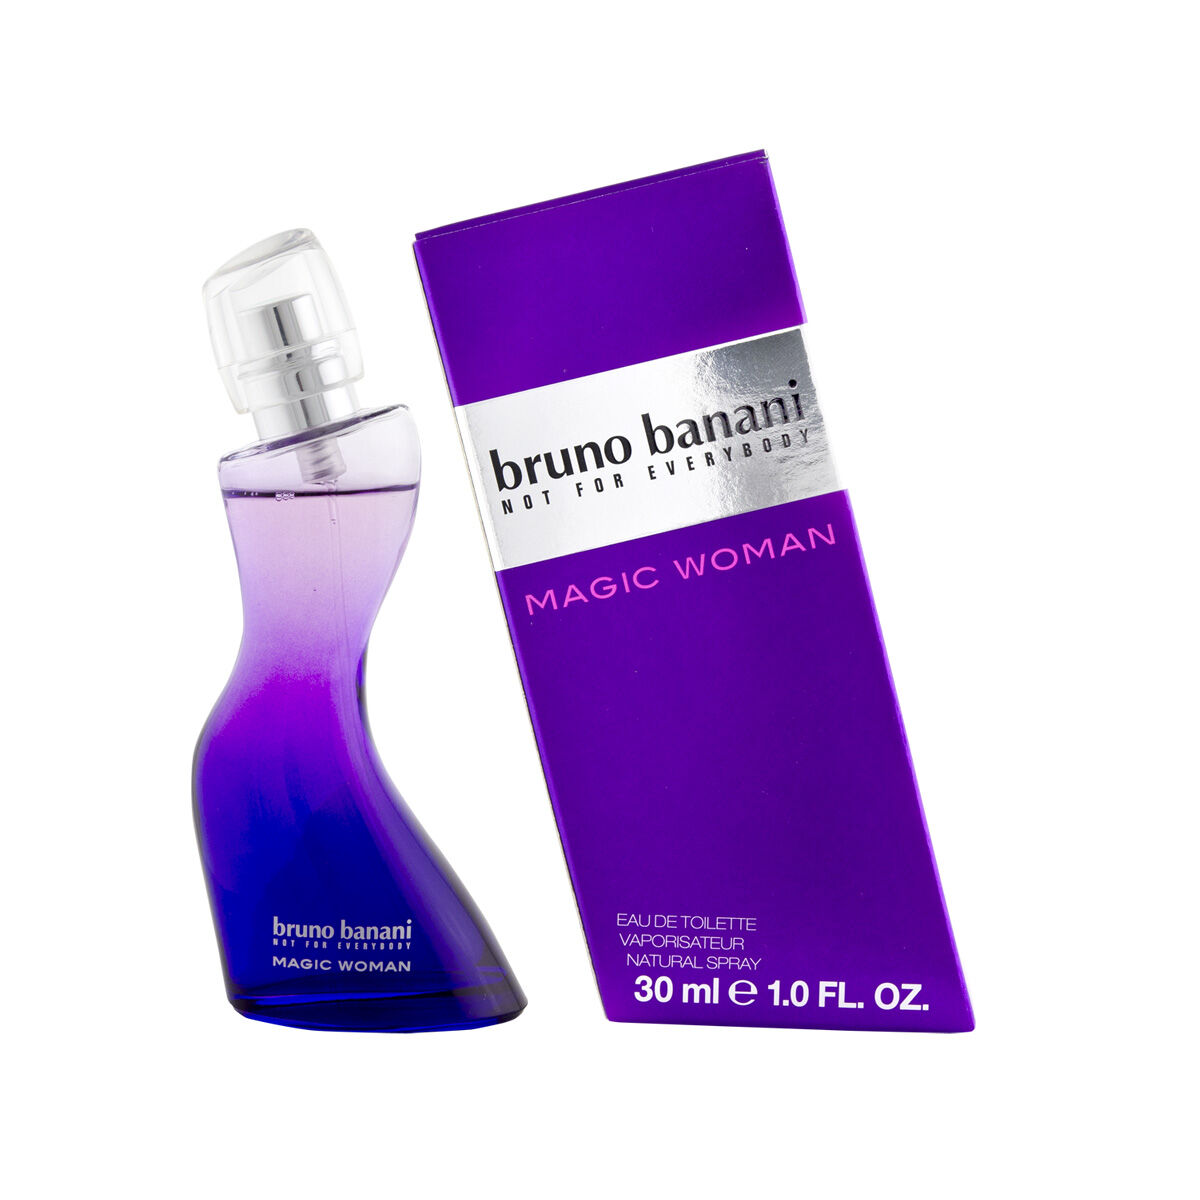 Parfum Femme Bruno Banani EDT Magic Woman 30 ml